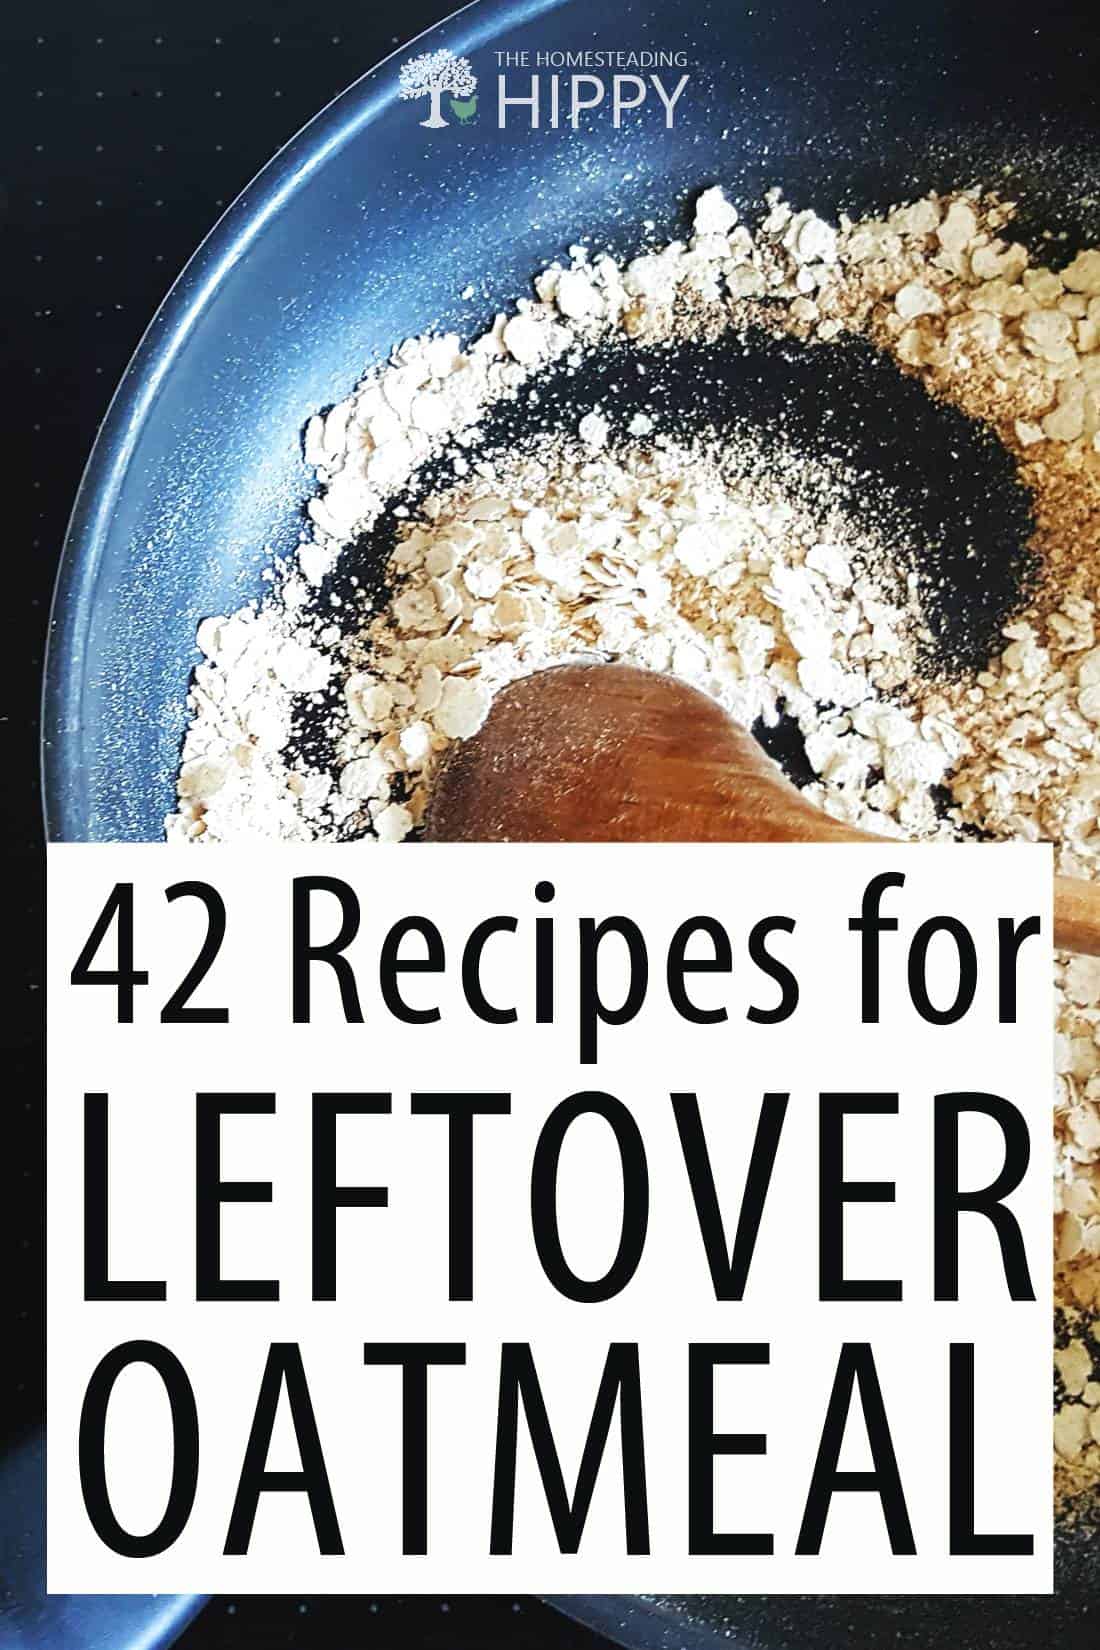 leftover oatmeal recipes Pinterest image